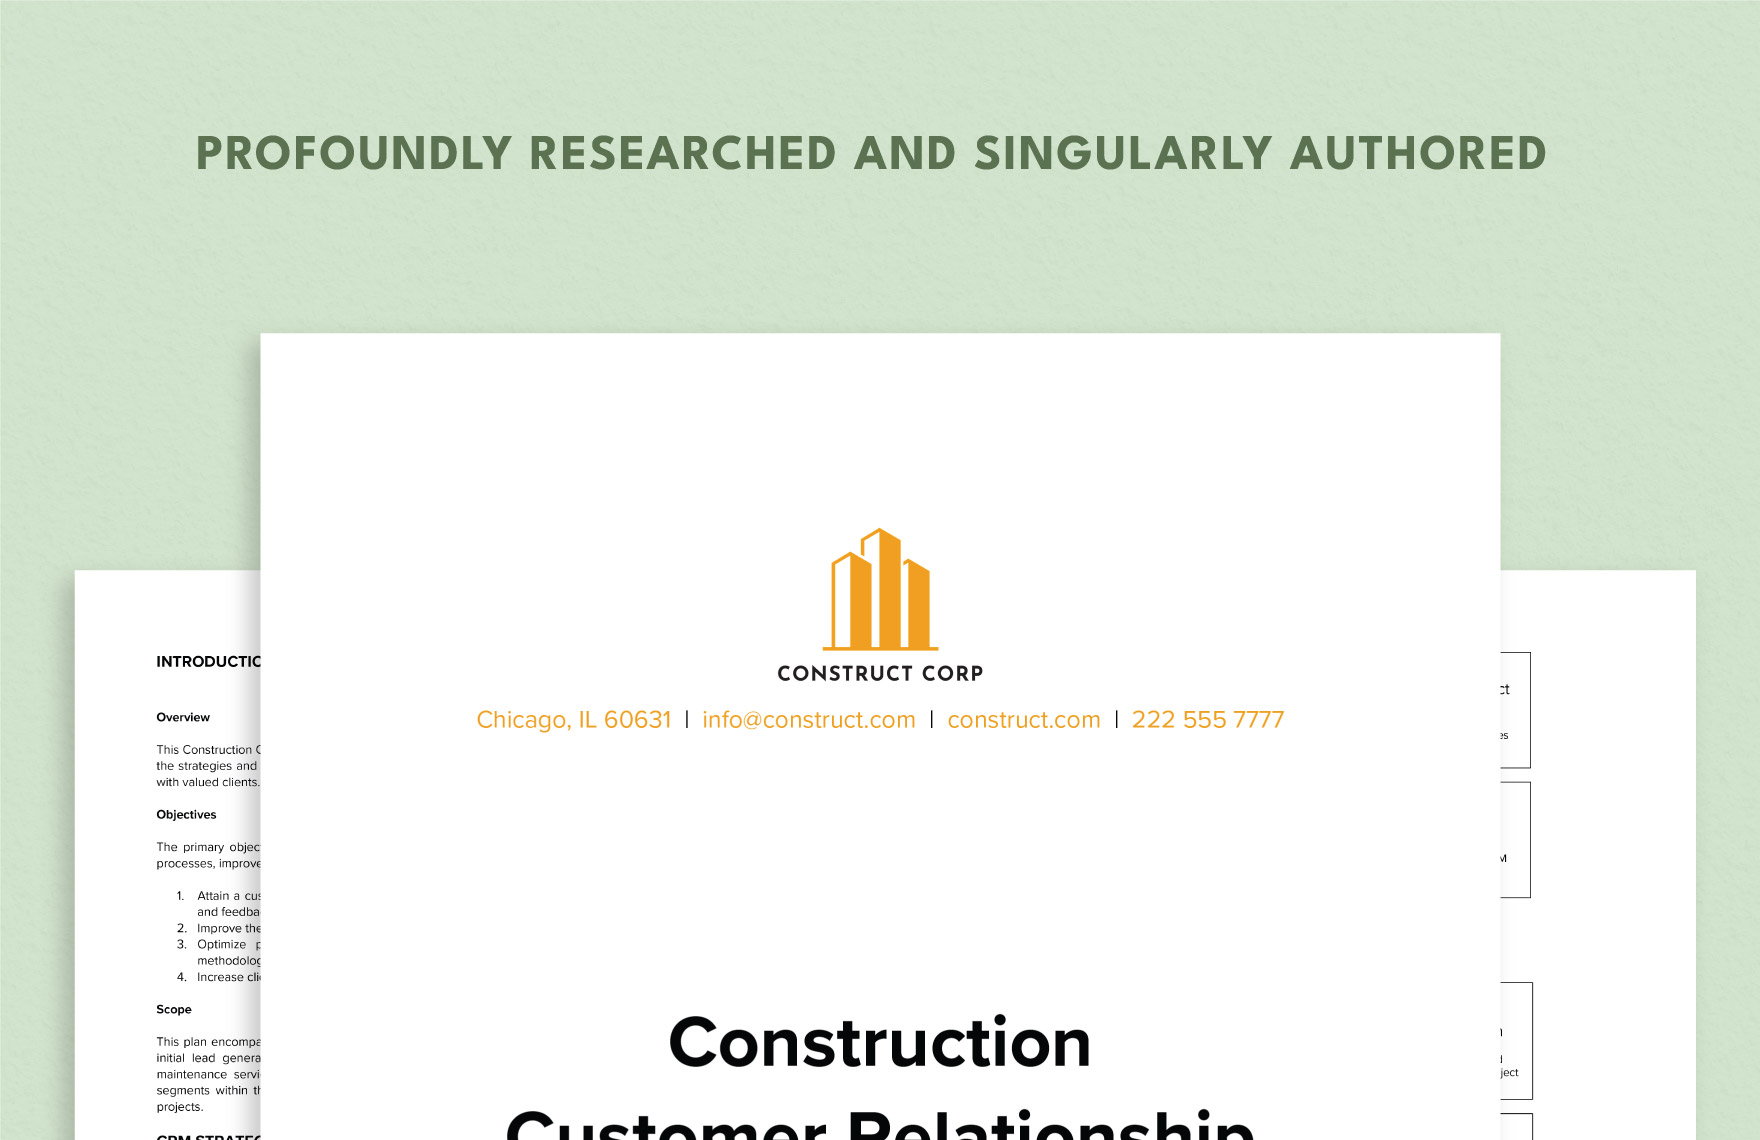 Construction Customer Relationship Management (CRM) Plan Template